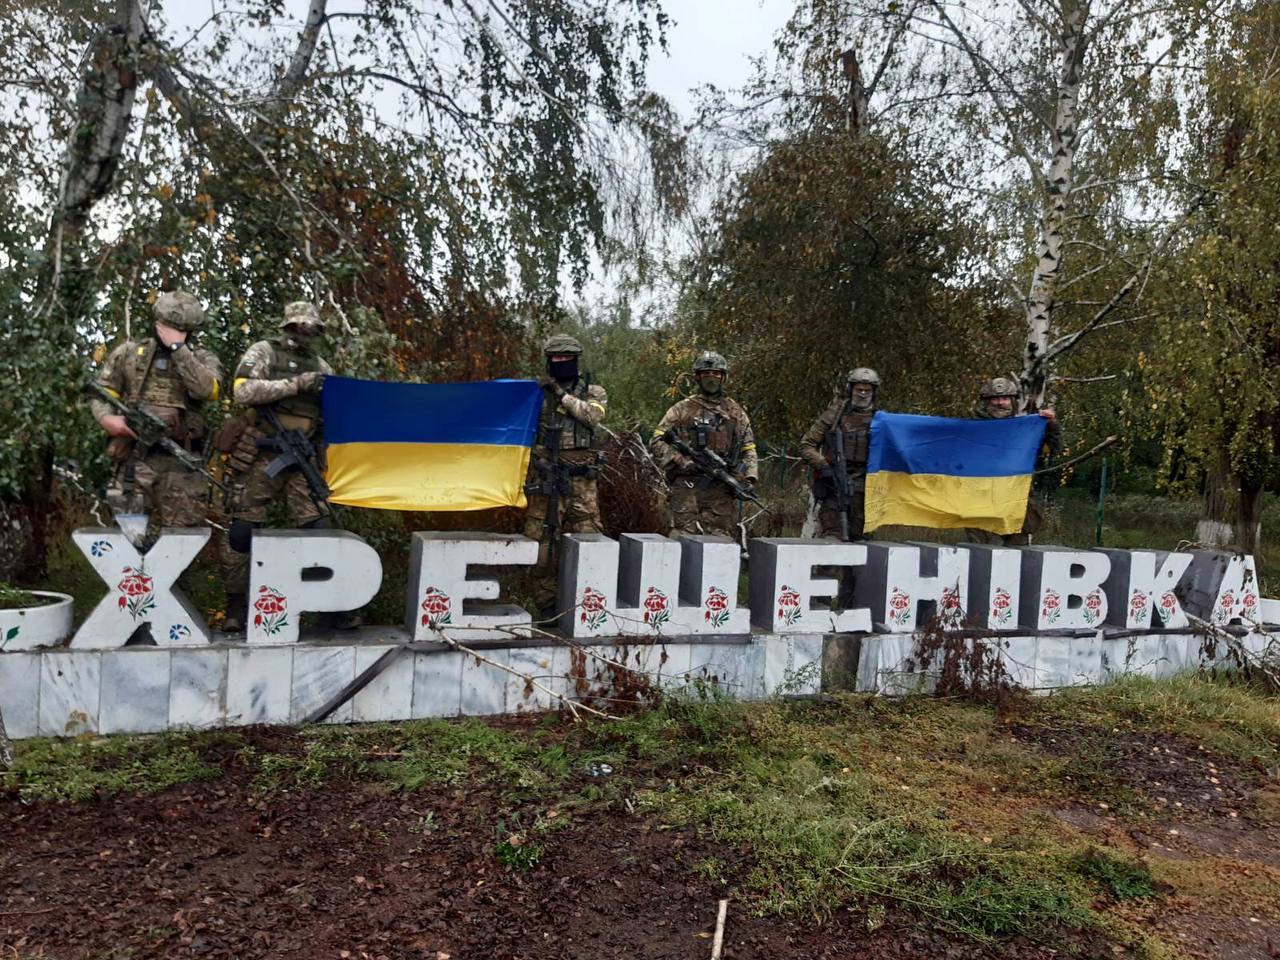 село бегунь украина фото